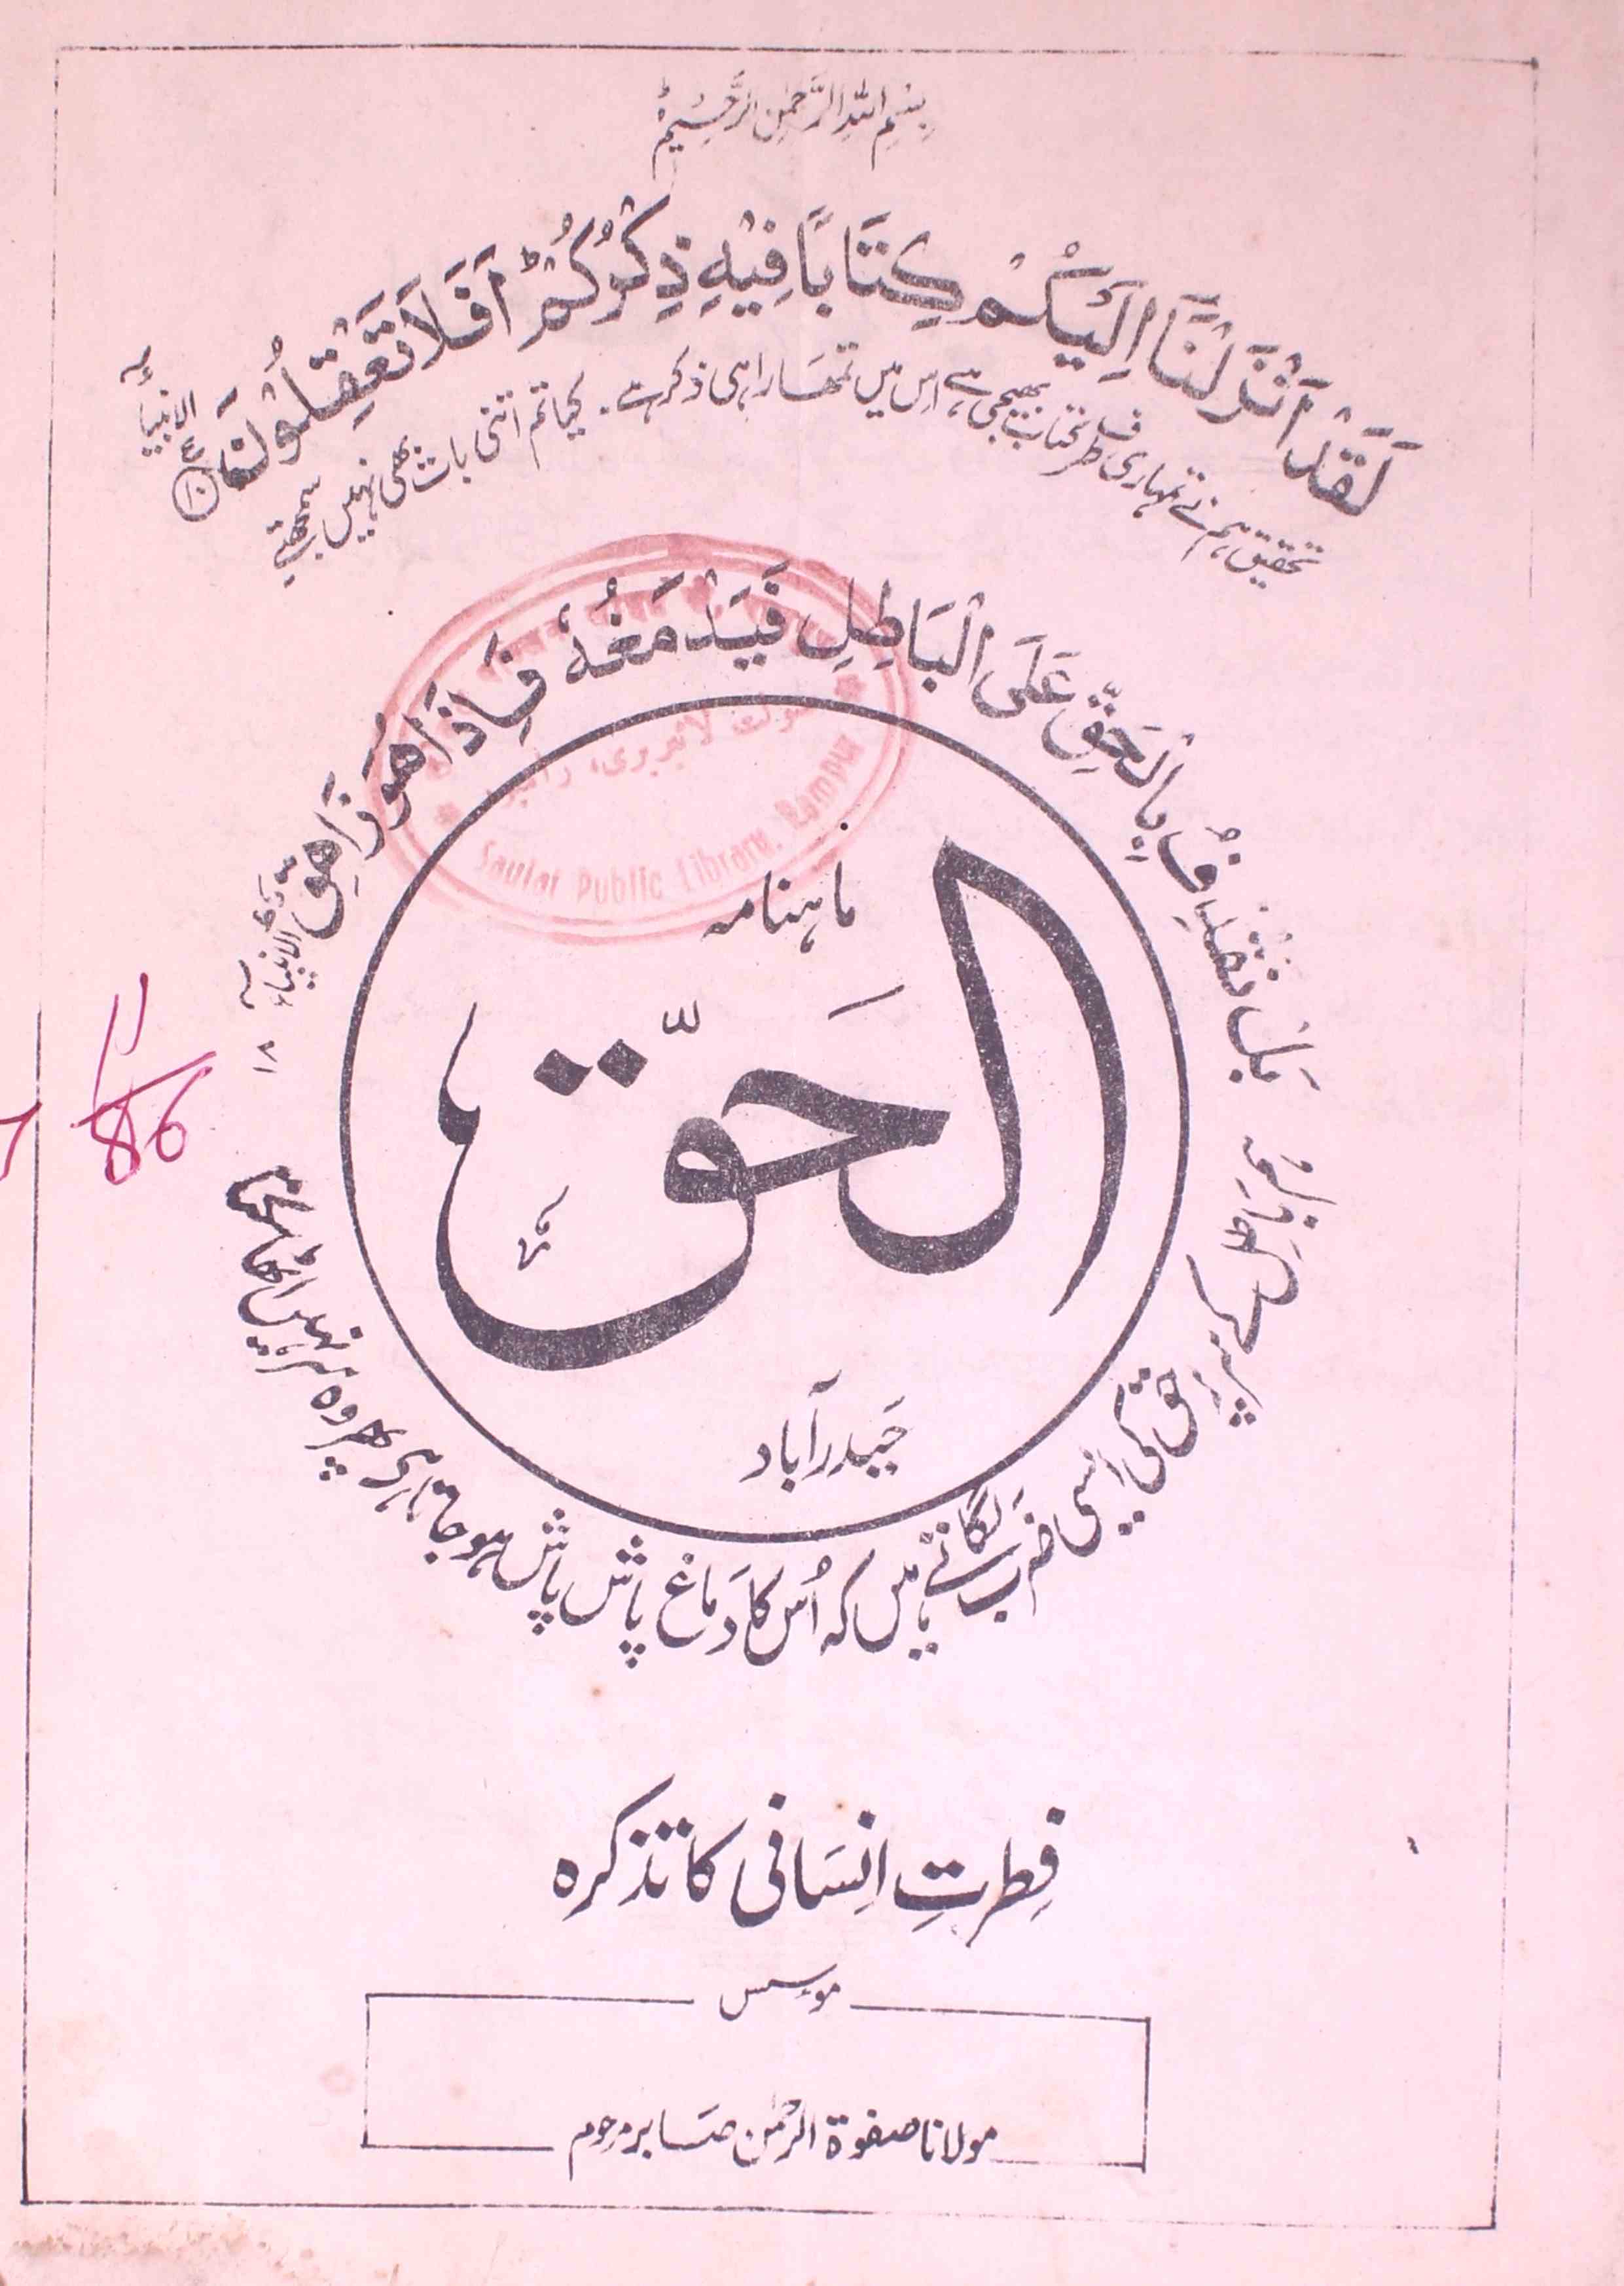 Al-Haq Jild 44 Sumara 480, 481-Shumara Number-480,481